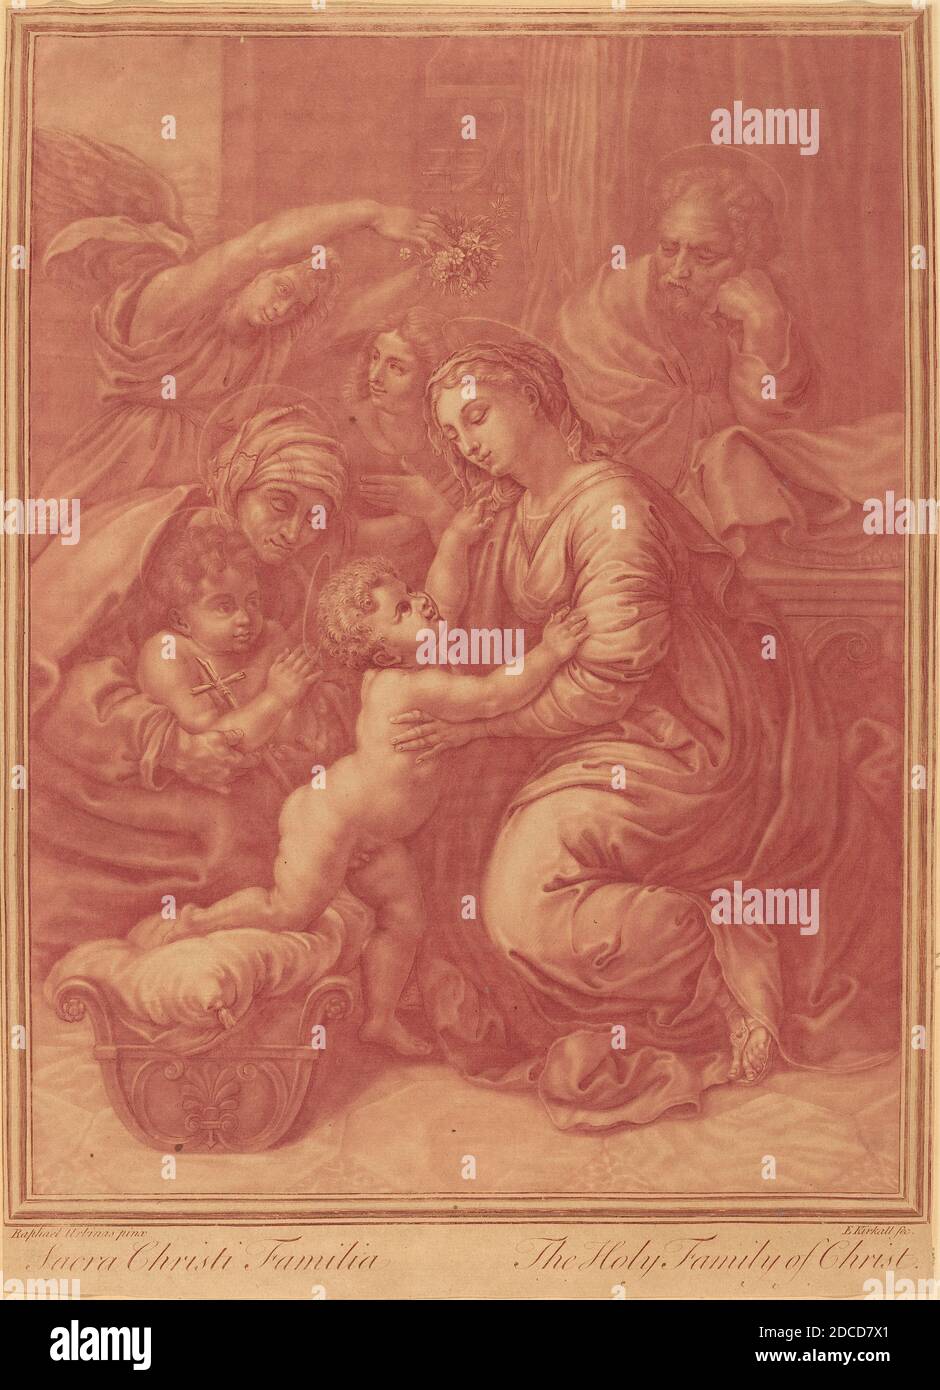 Elisha Kirkall, (artista), inglese, c.. 1682 - 1742, Raphael, (artista dopo), Marchigiano, 1483 - 1520, la Sacra Famiglia, inizio XVIII secolo, mezzotint stampato in sanguina Foto Stock